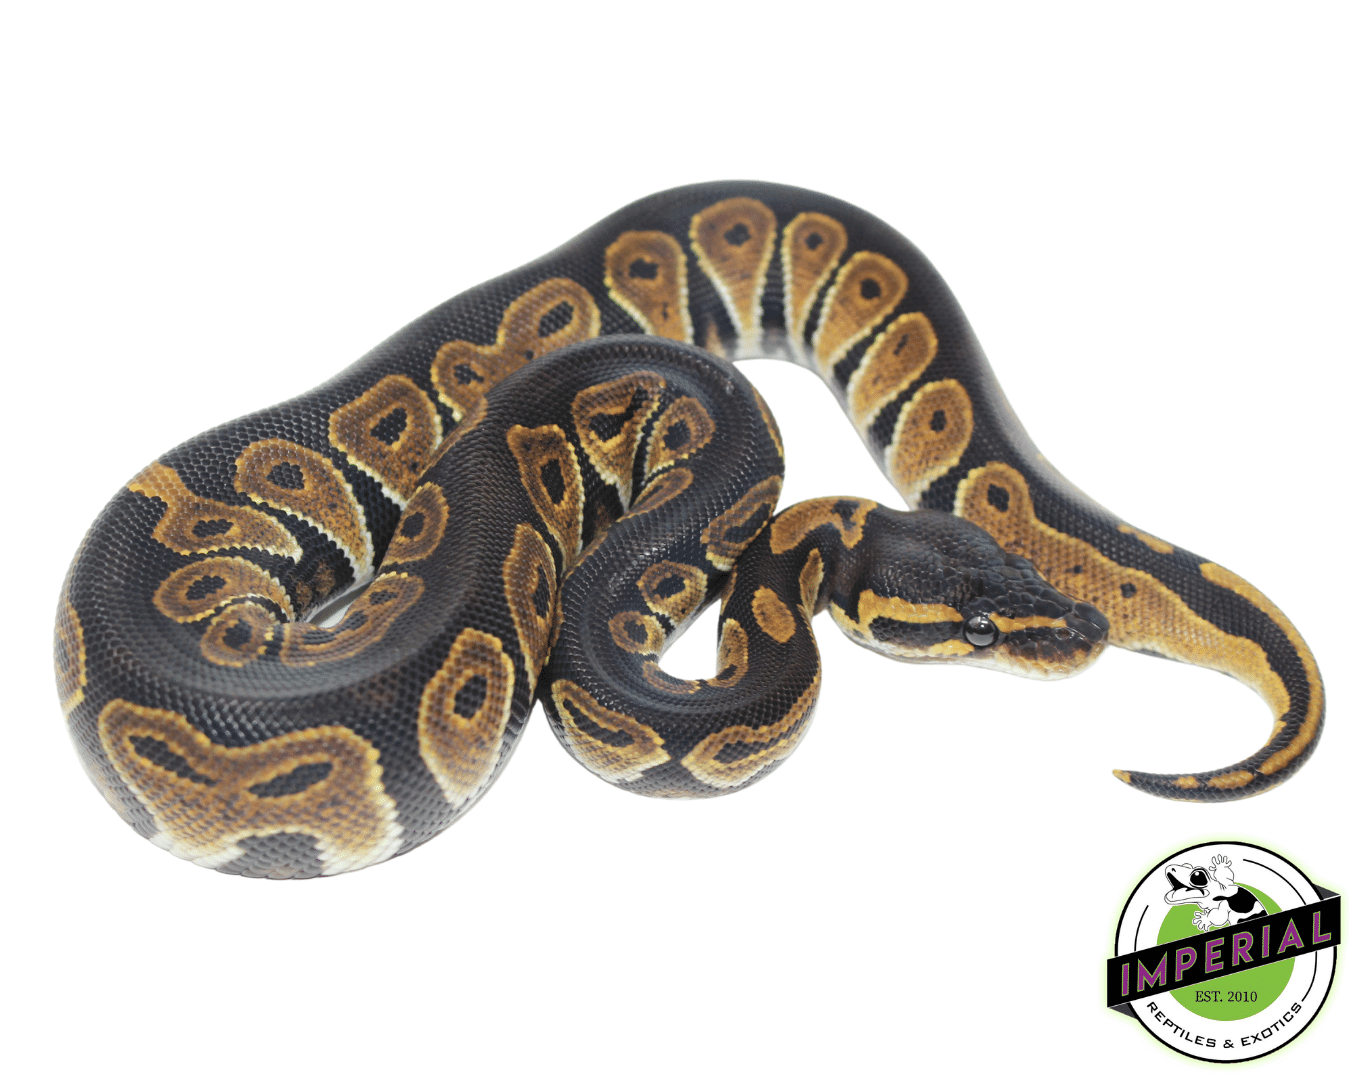 blackhead ball python for sale, buy reptiles online